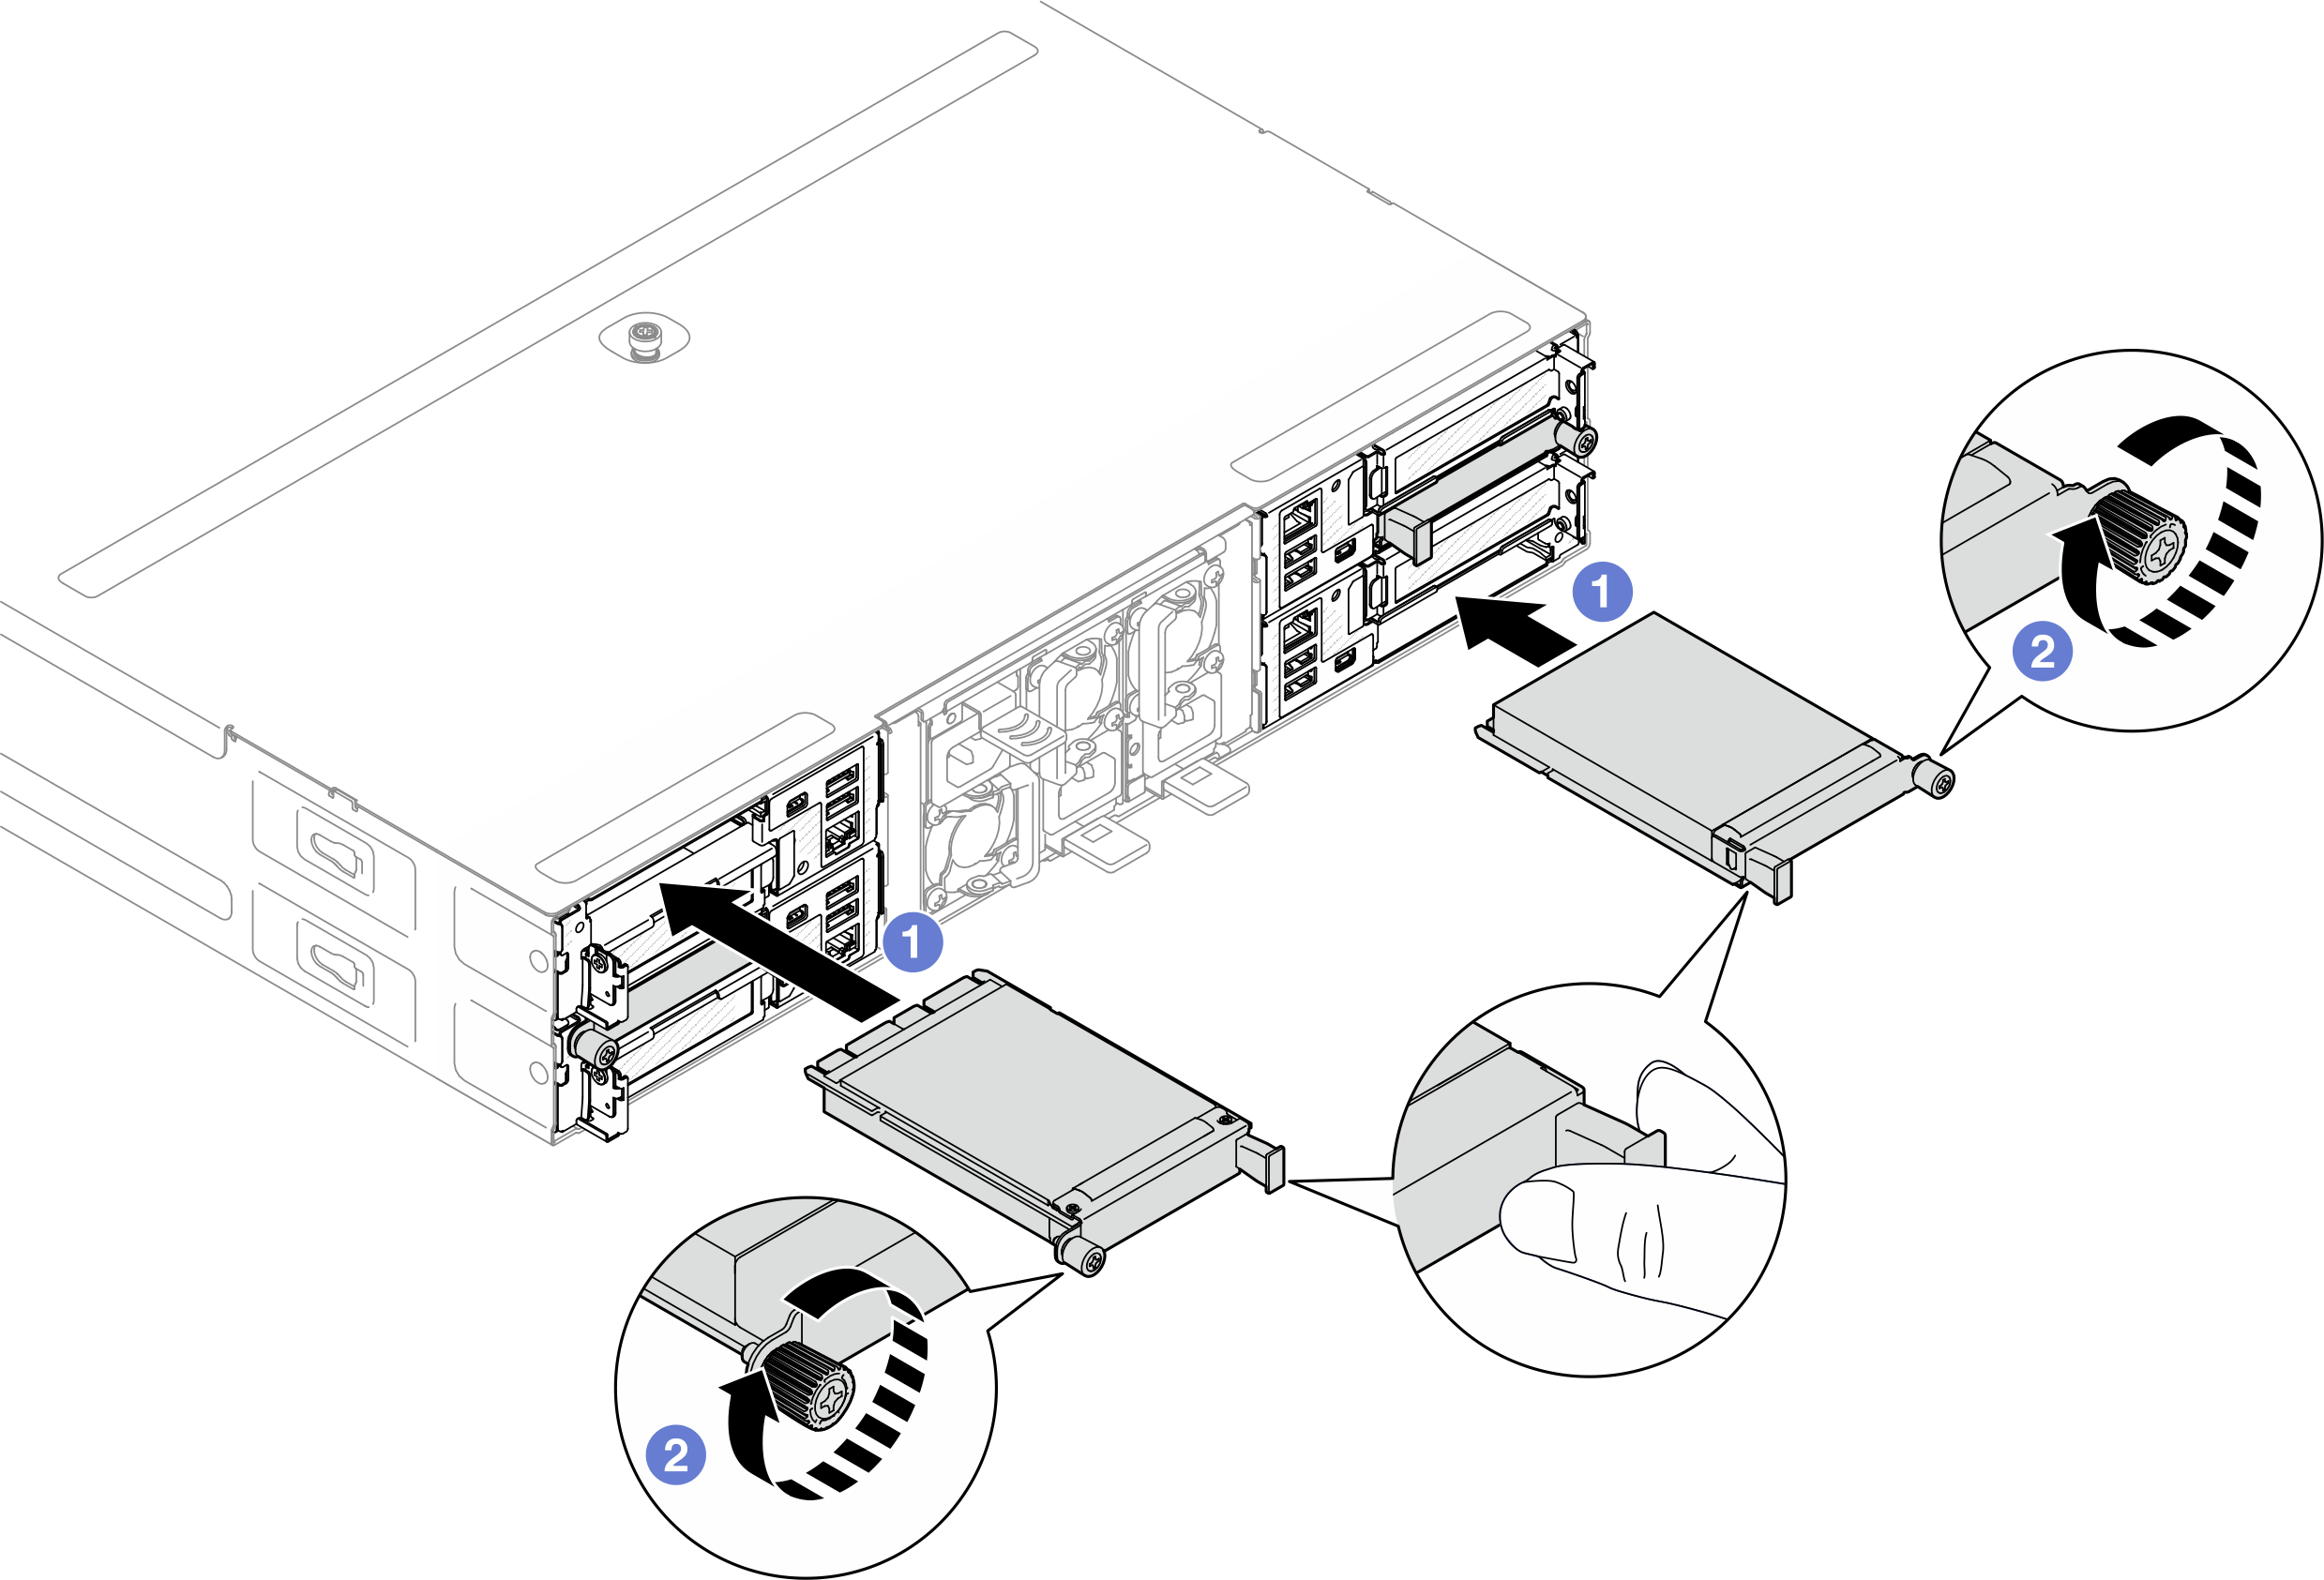 Installation of rear OCP module